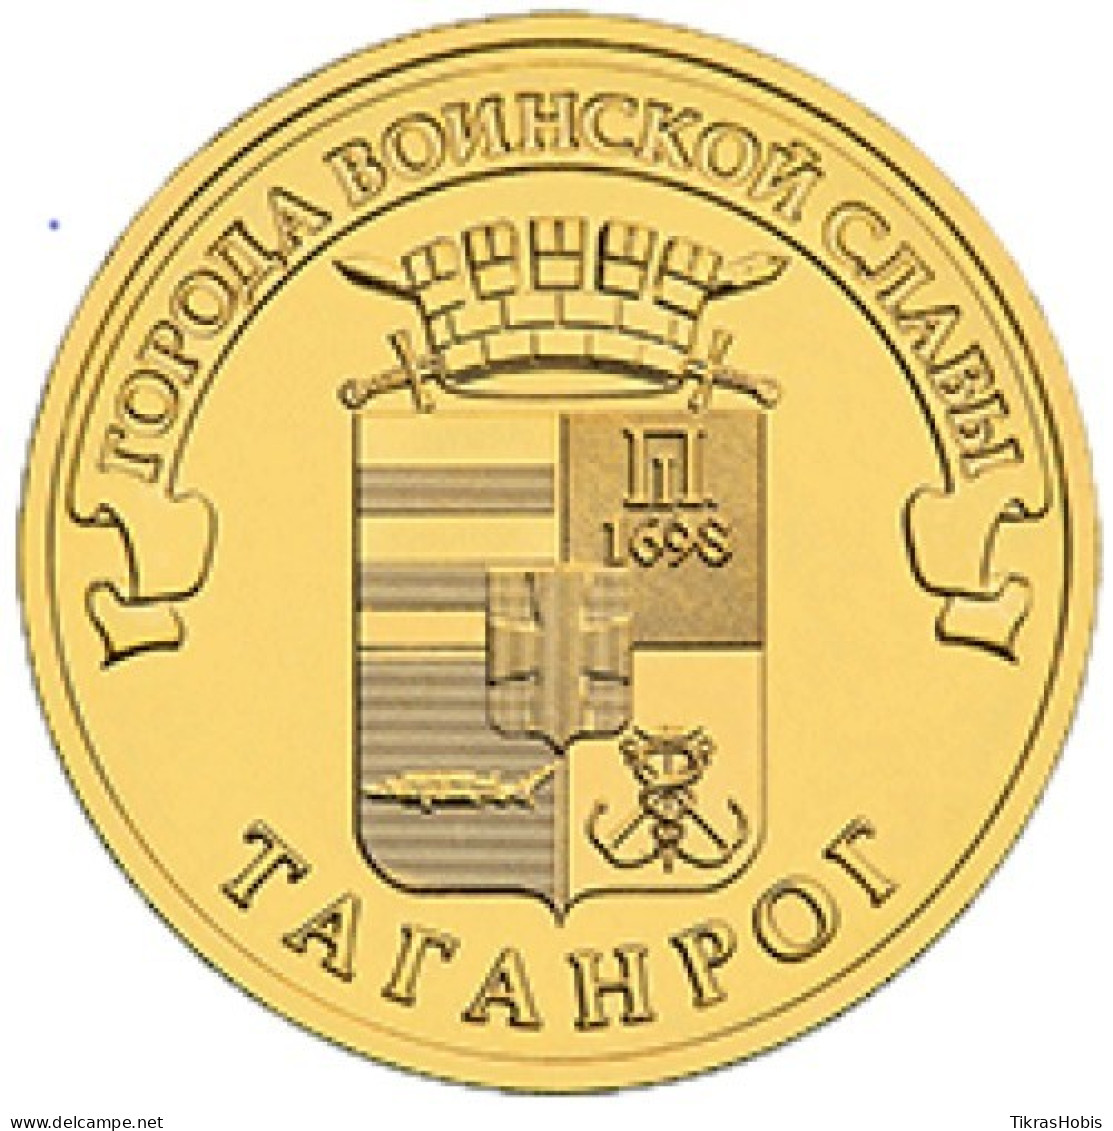 Russia 10 Rubles, 2015 Taganrog UC113 - Russia